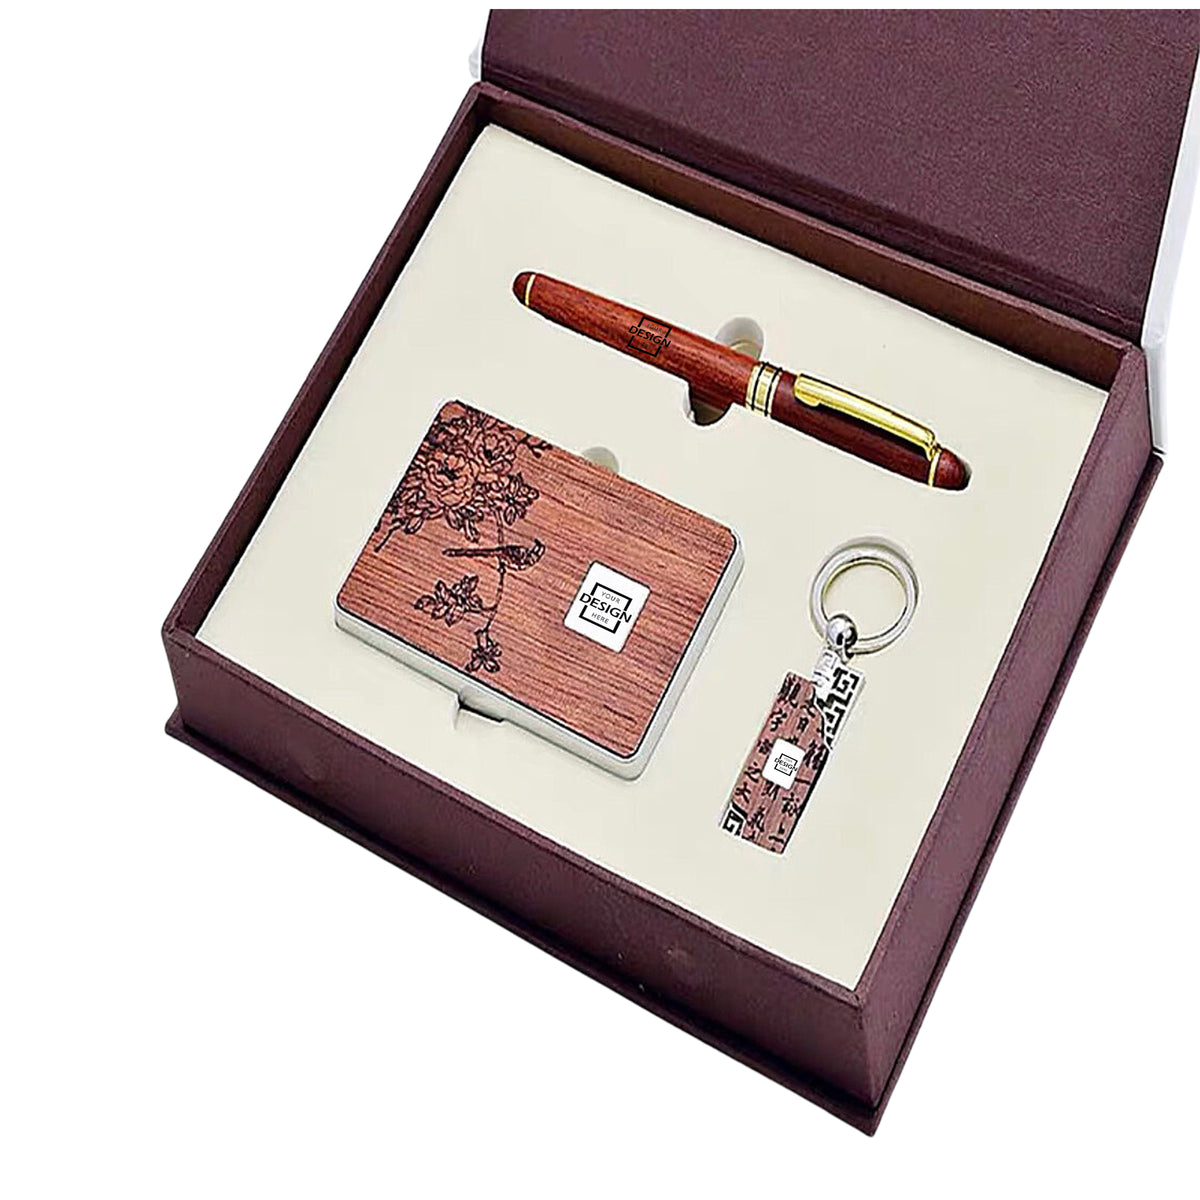 Souvenir Gift Set Office | 商務禮品定制logo公司活動送客戶實用書籤筆禮盒定制